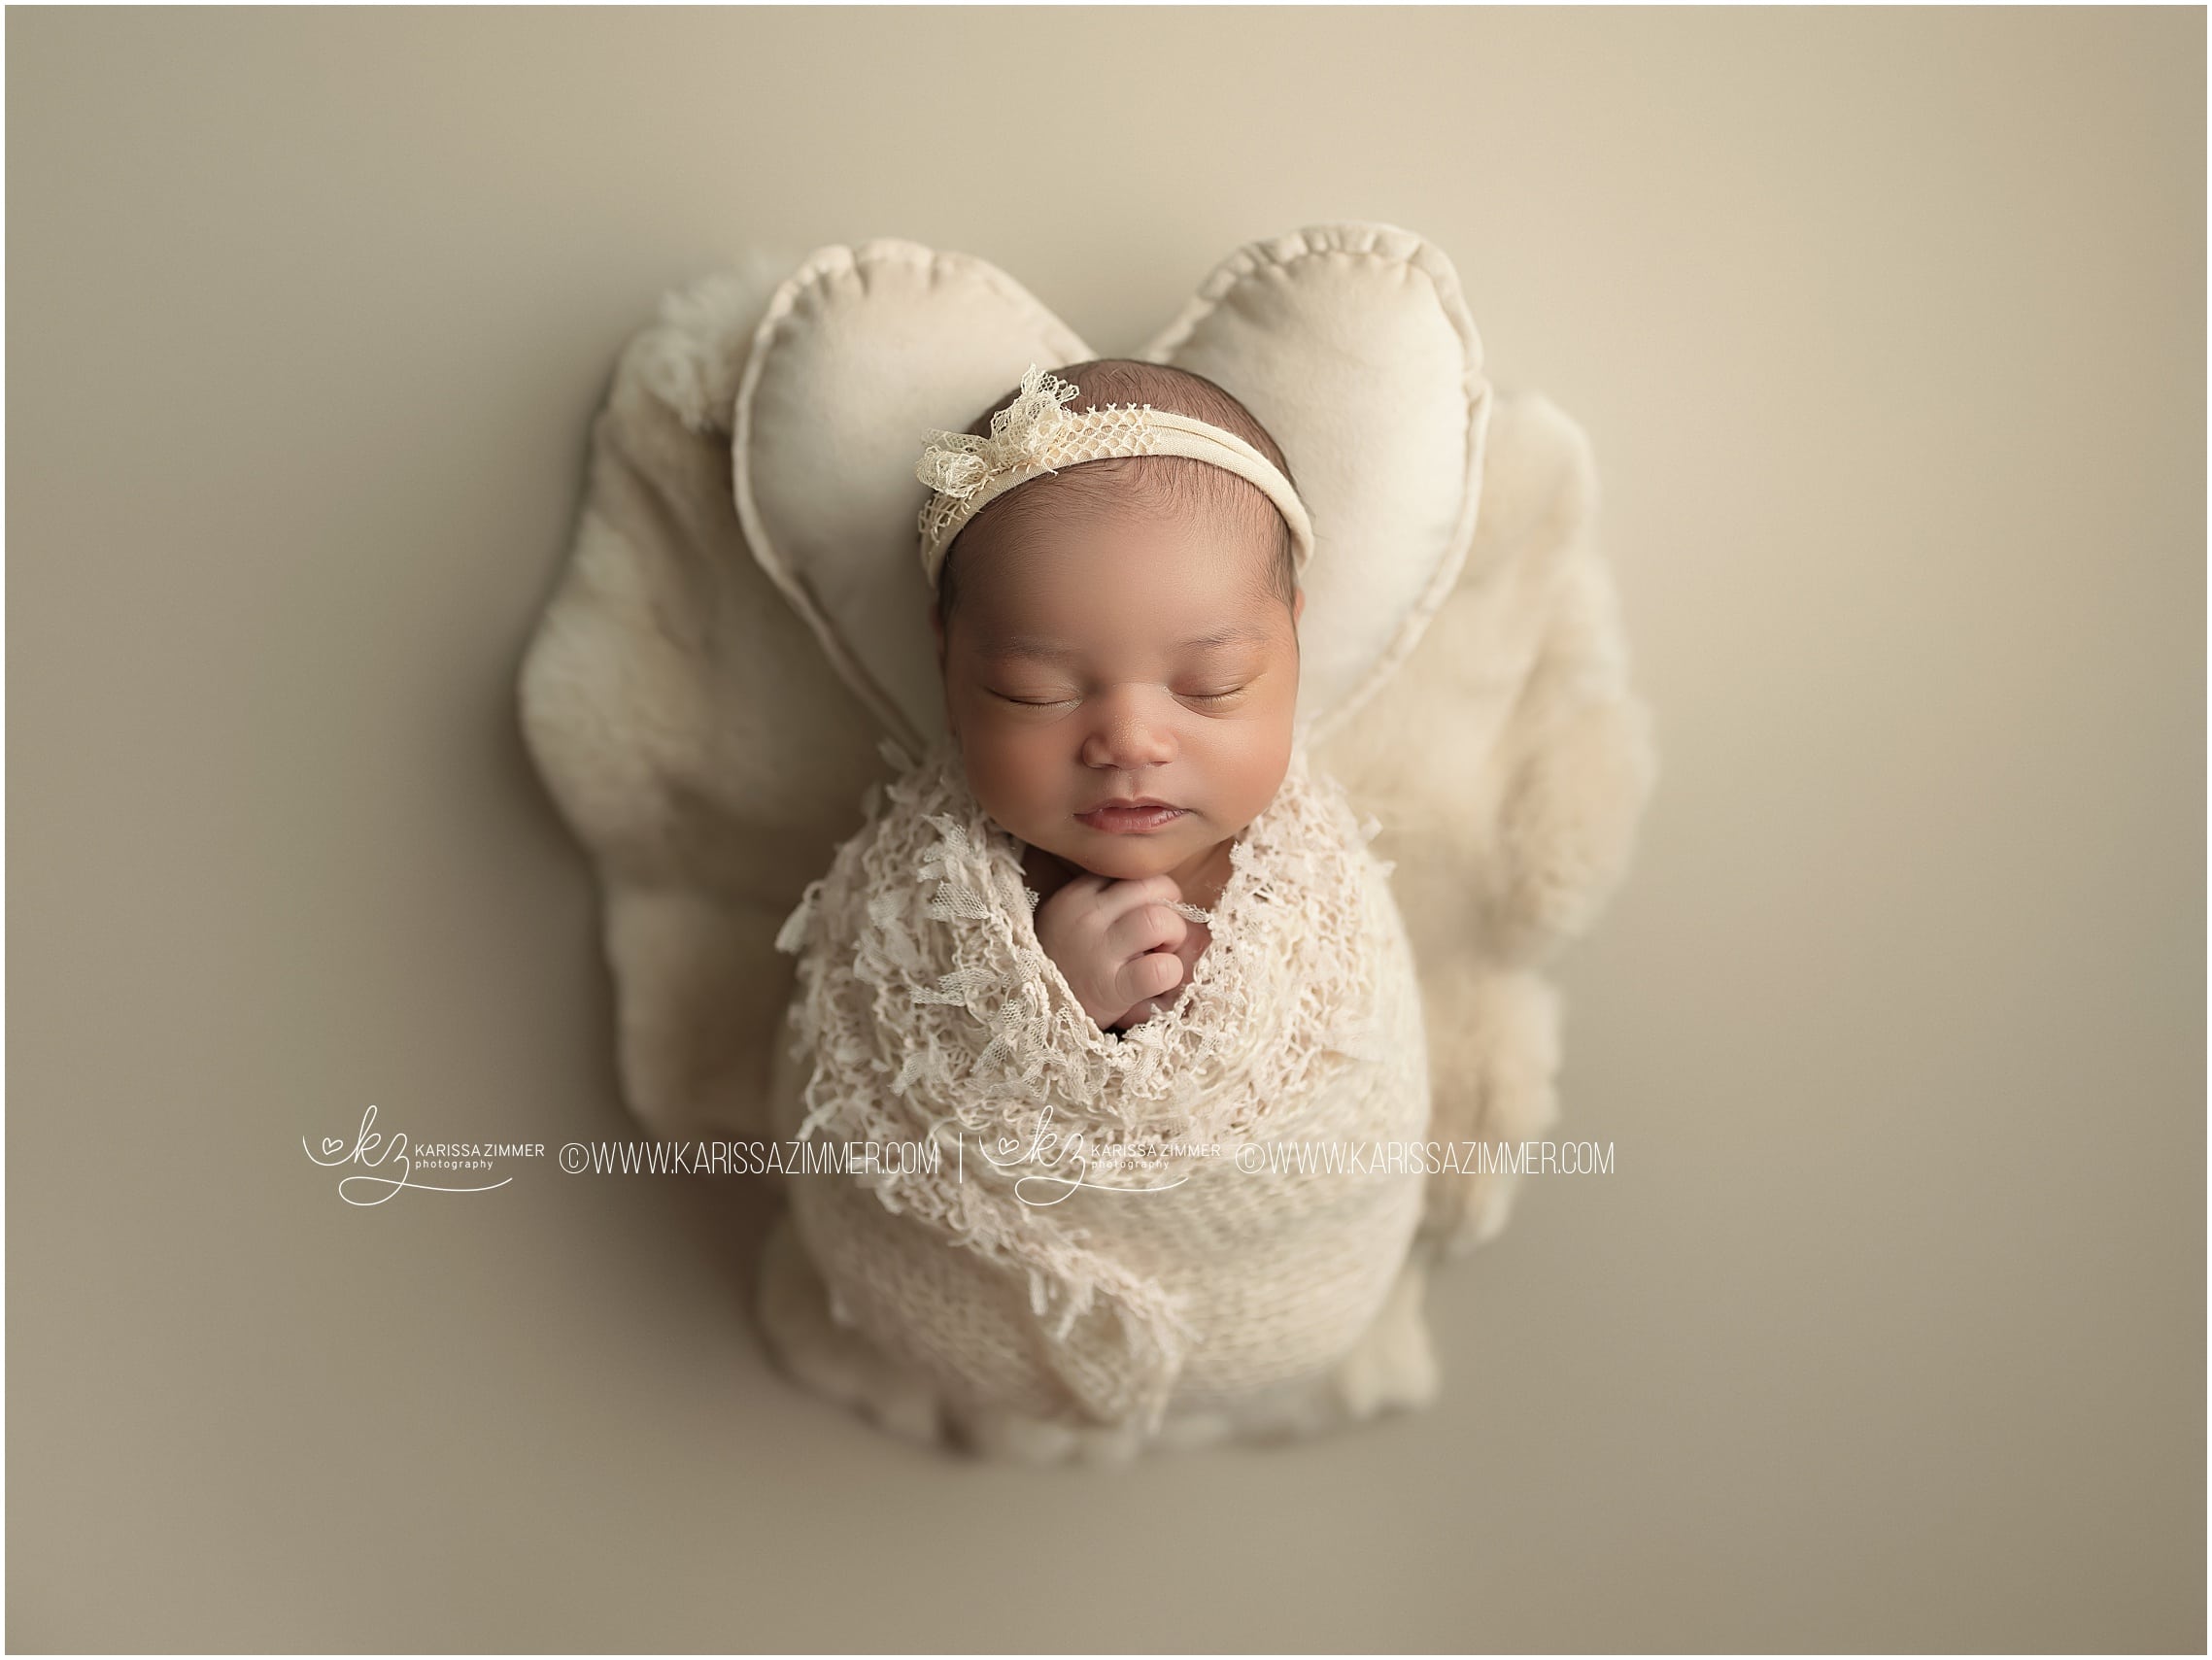 posed newborn photography 17011